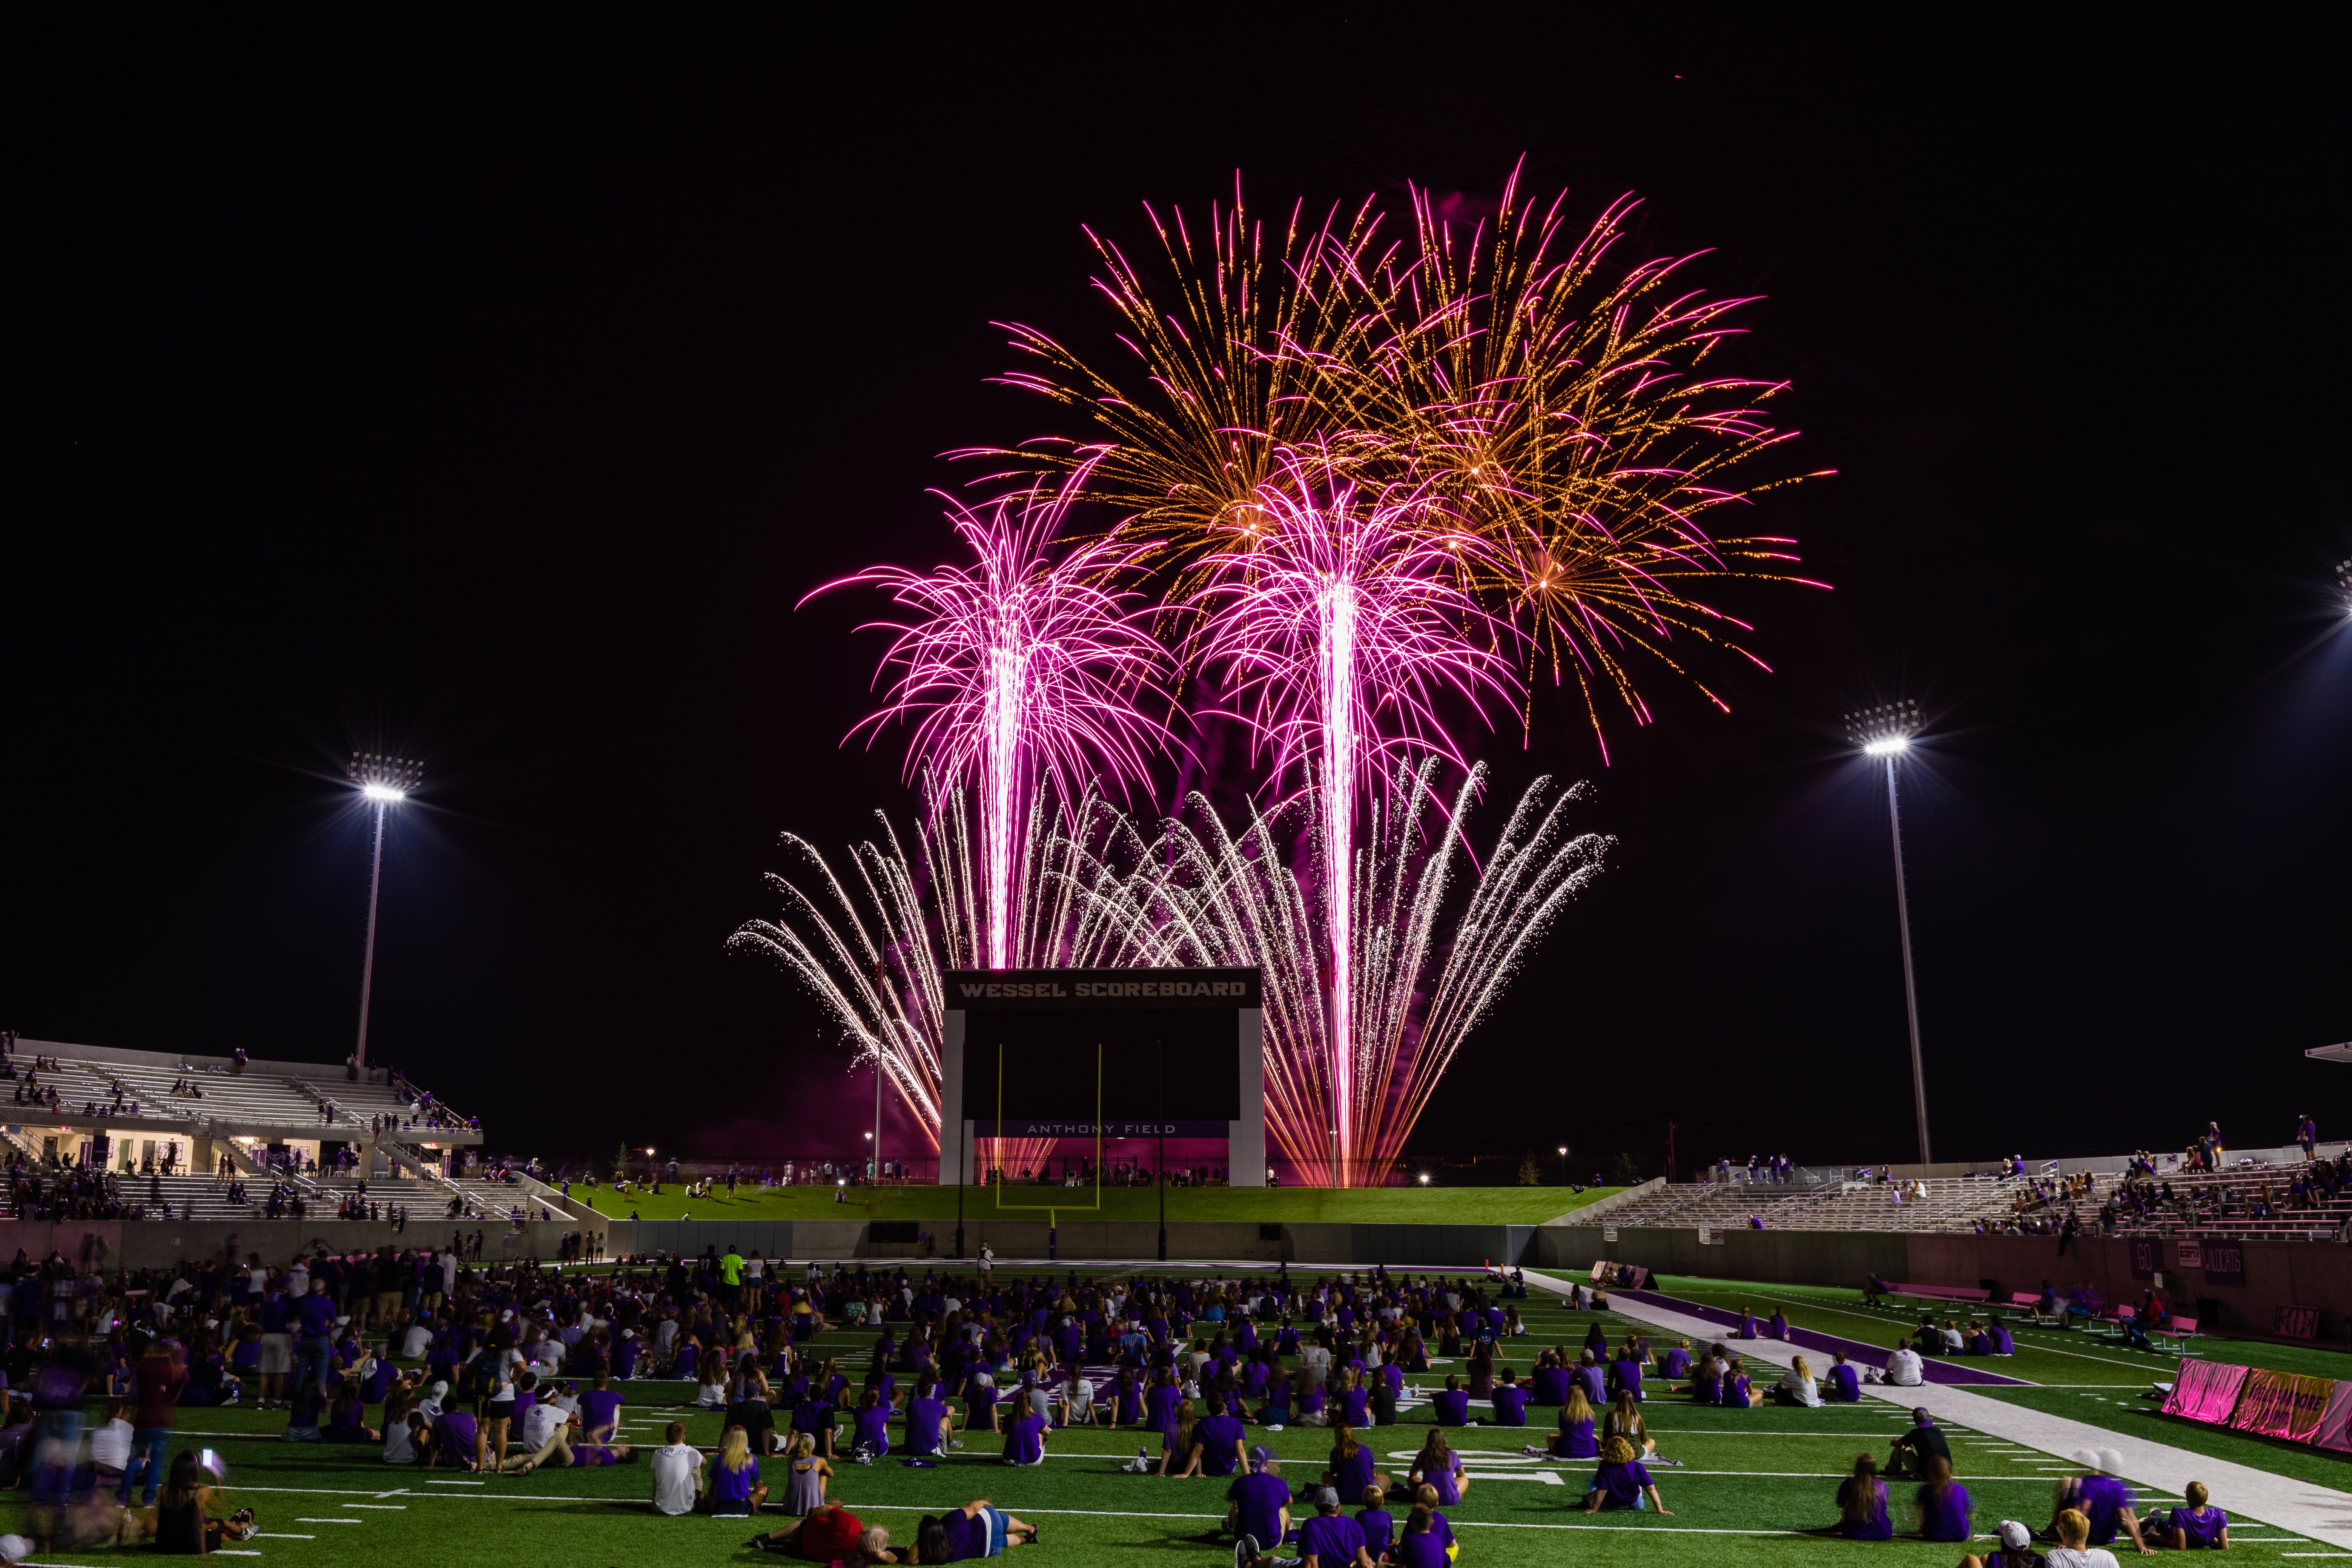 A brilliant display of fireworks illuminates the stadium.